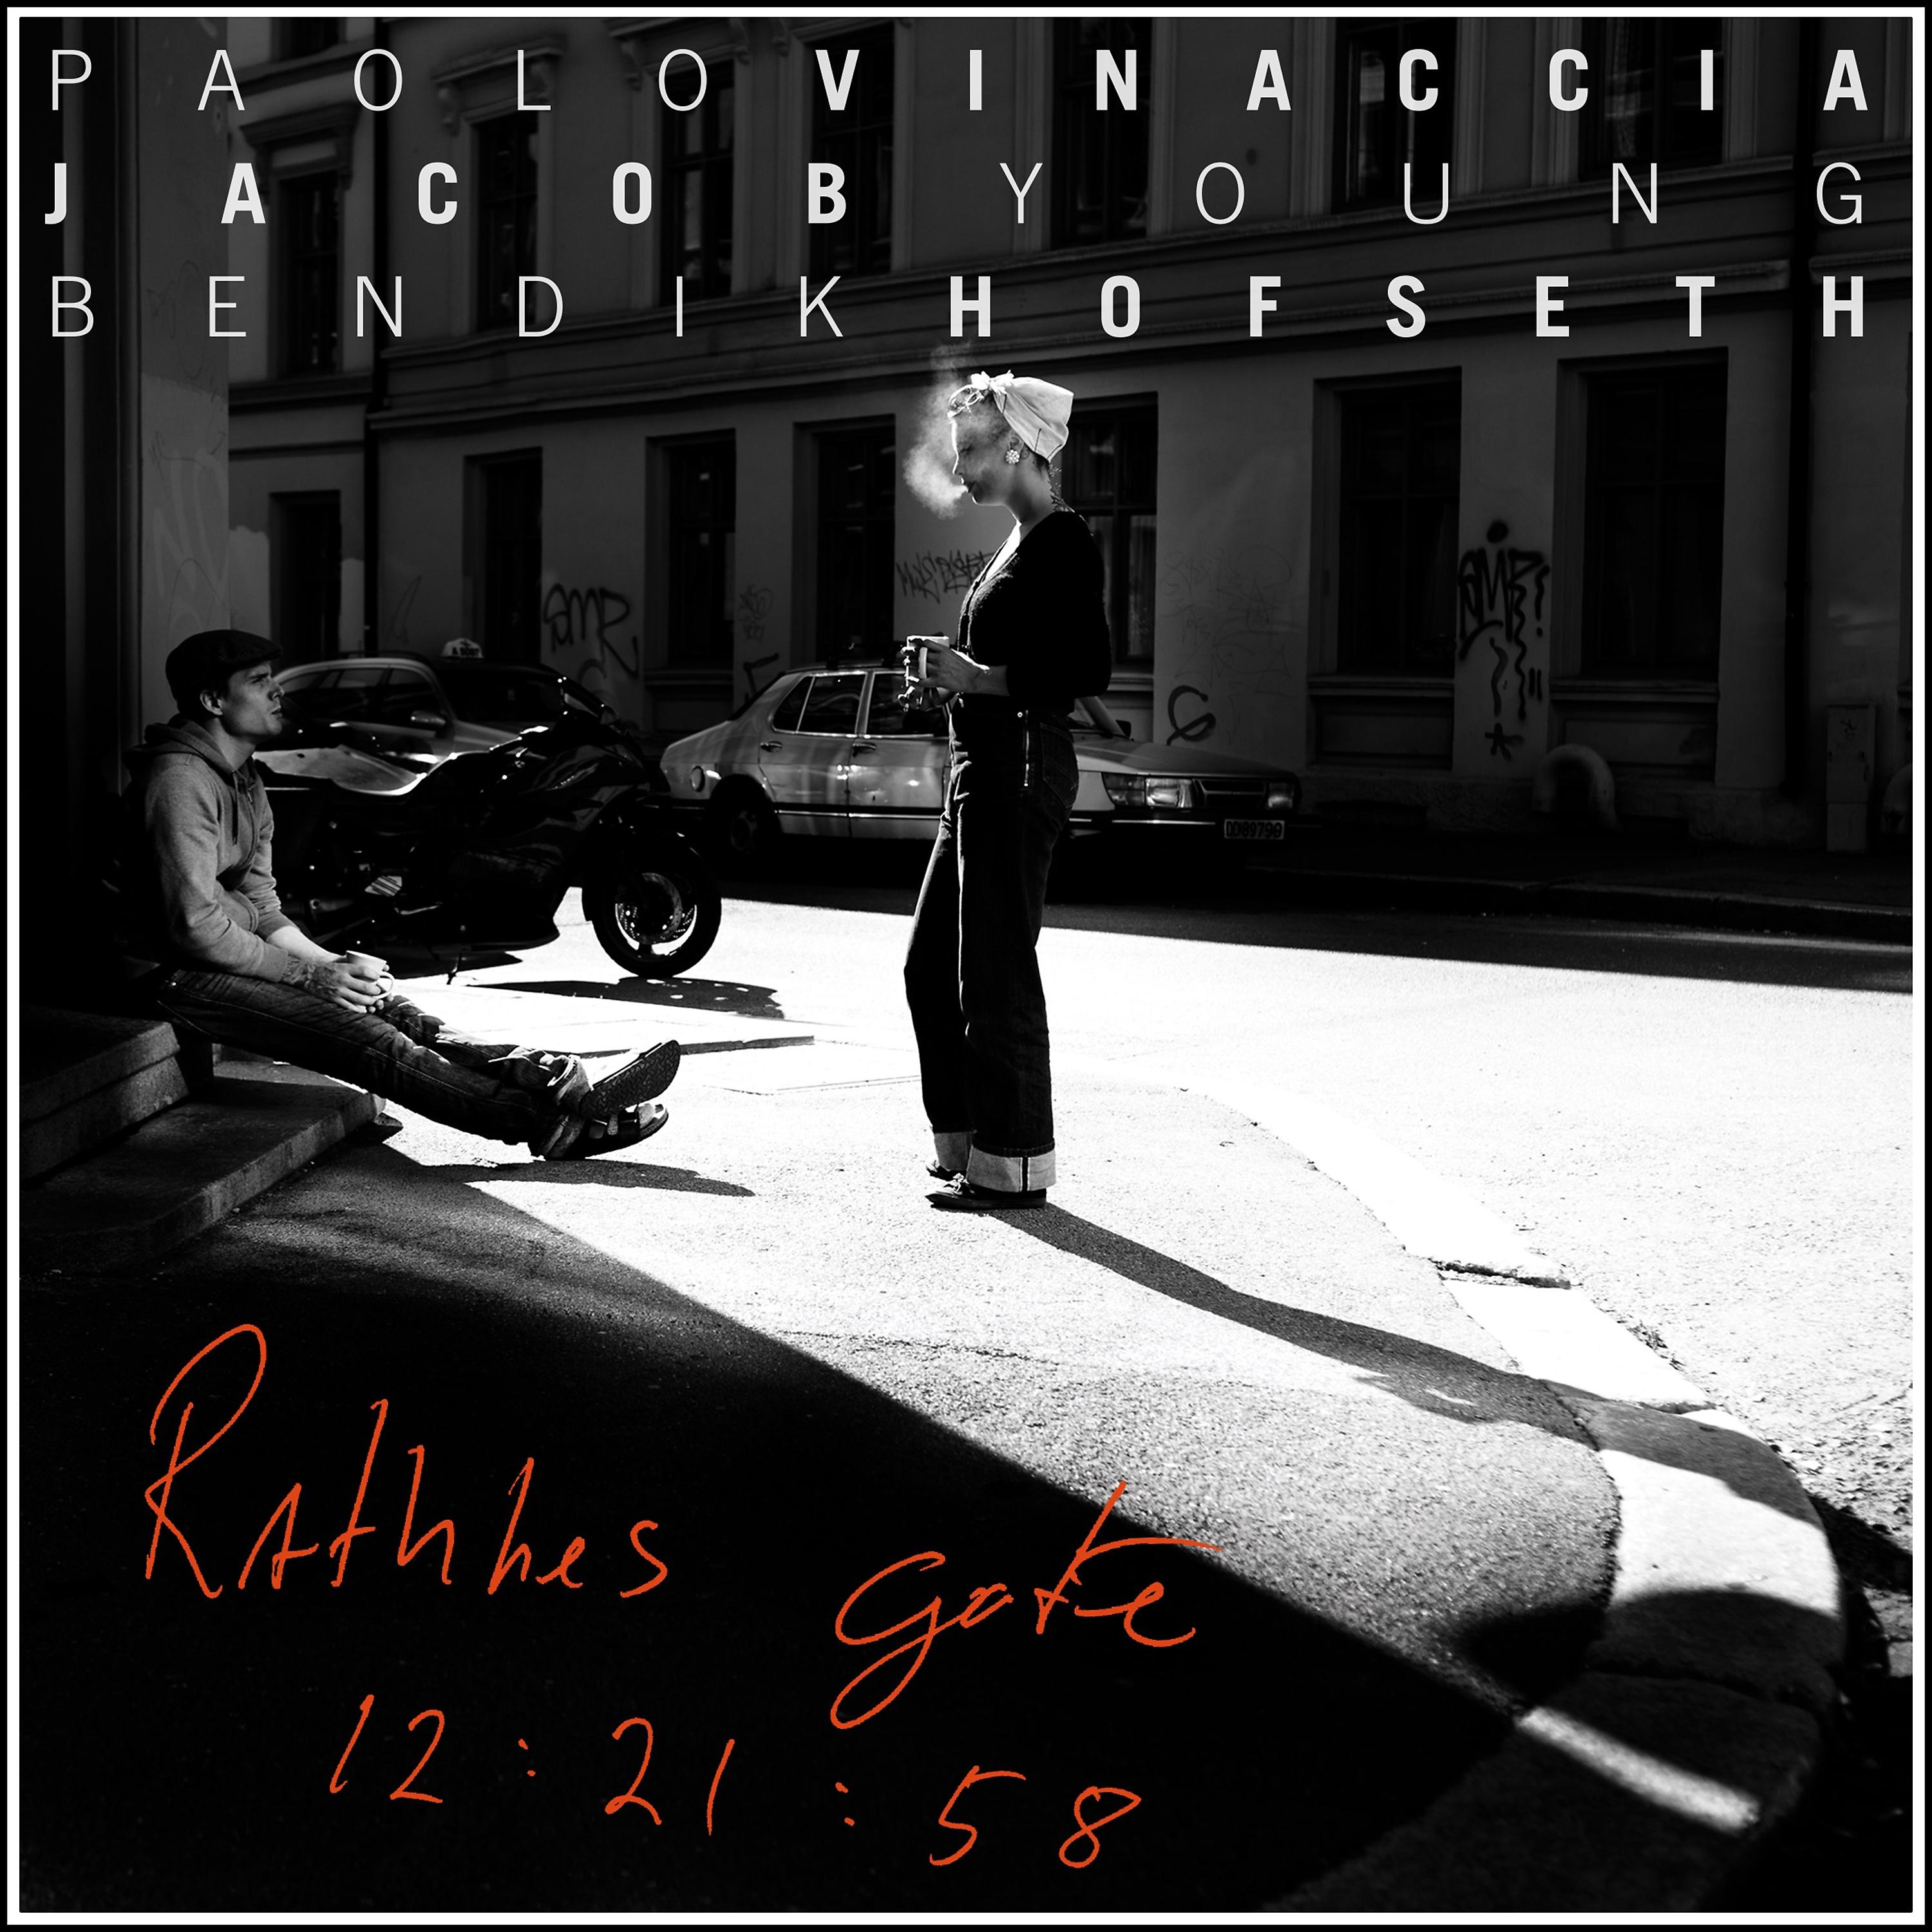 Постер альбома Rathkes gate 12:21:58